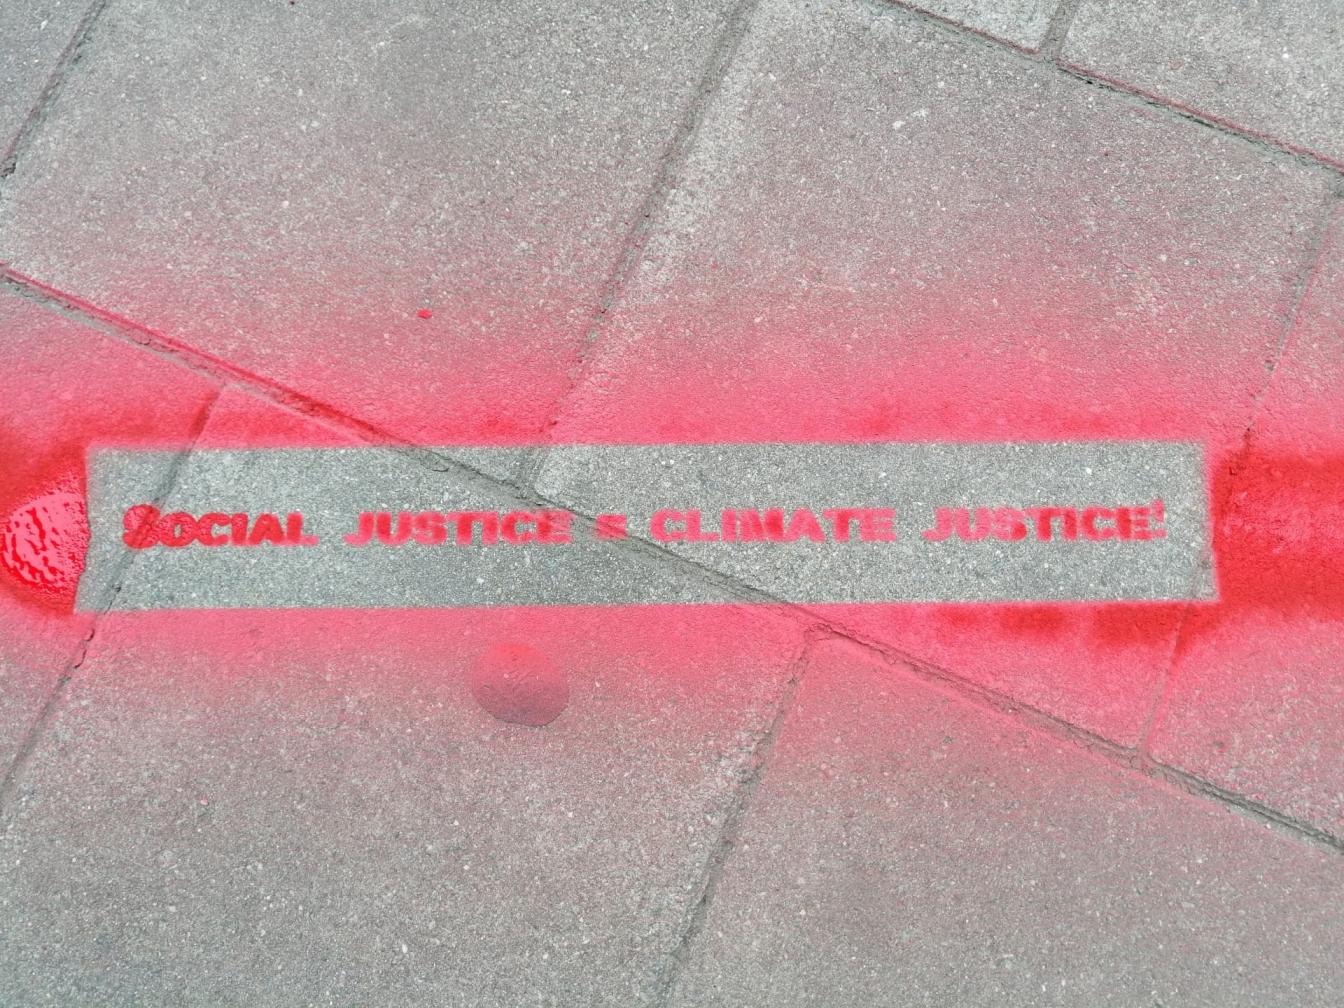 SLogan 'Social justice is climate justice!'